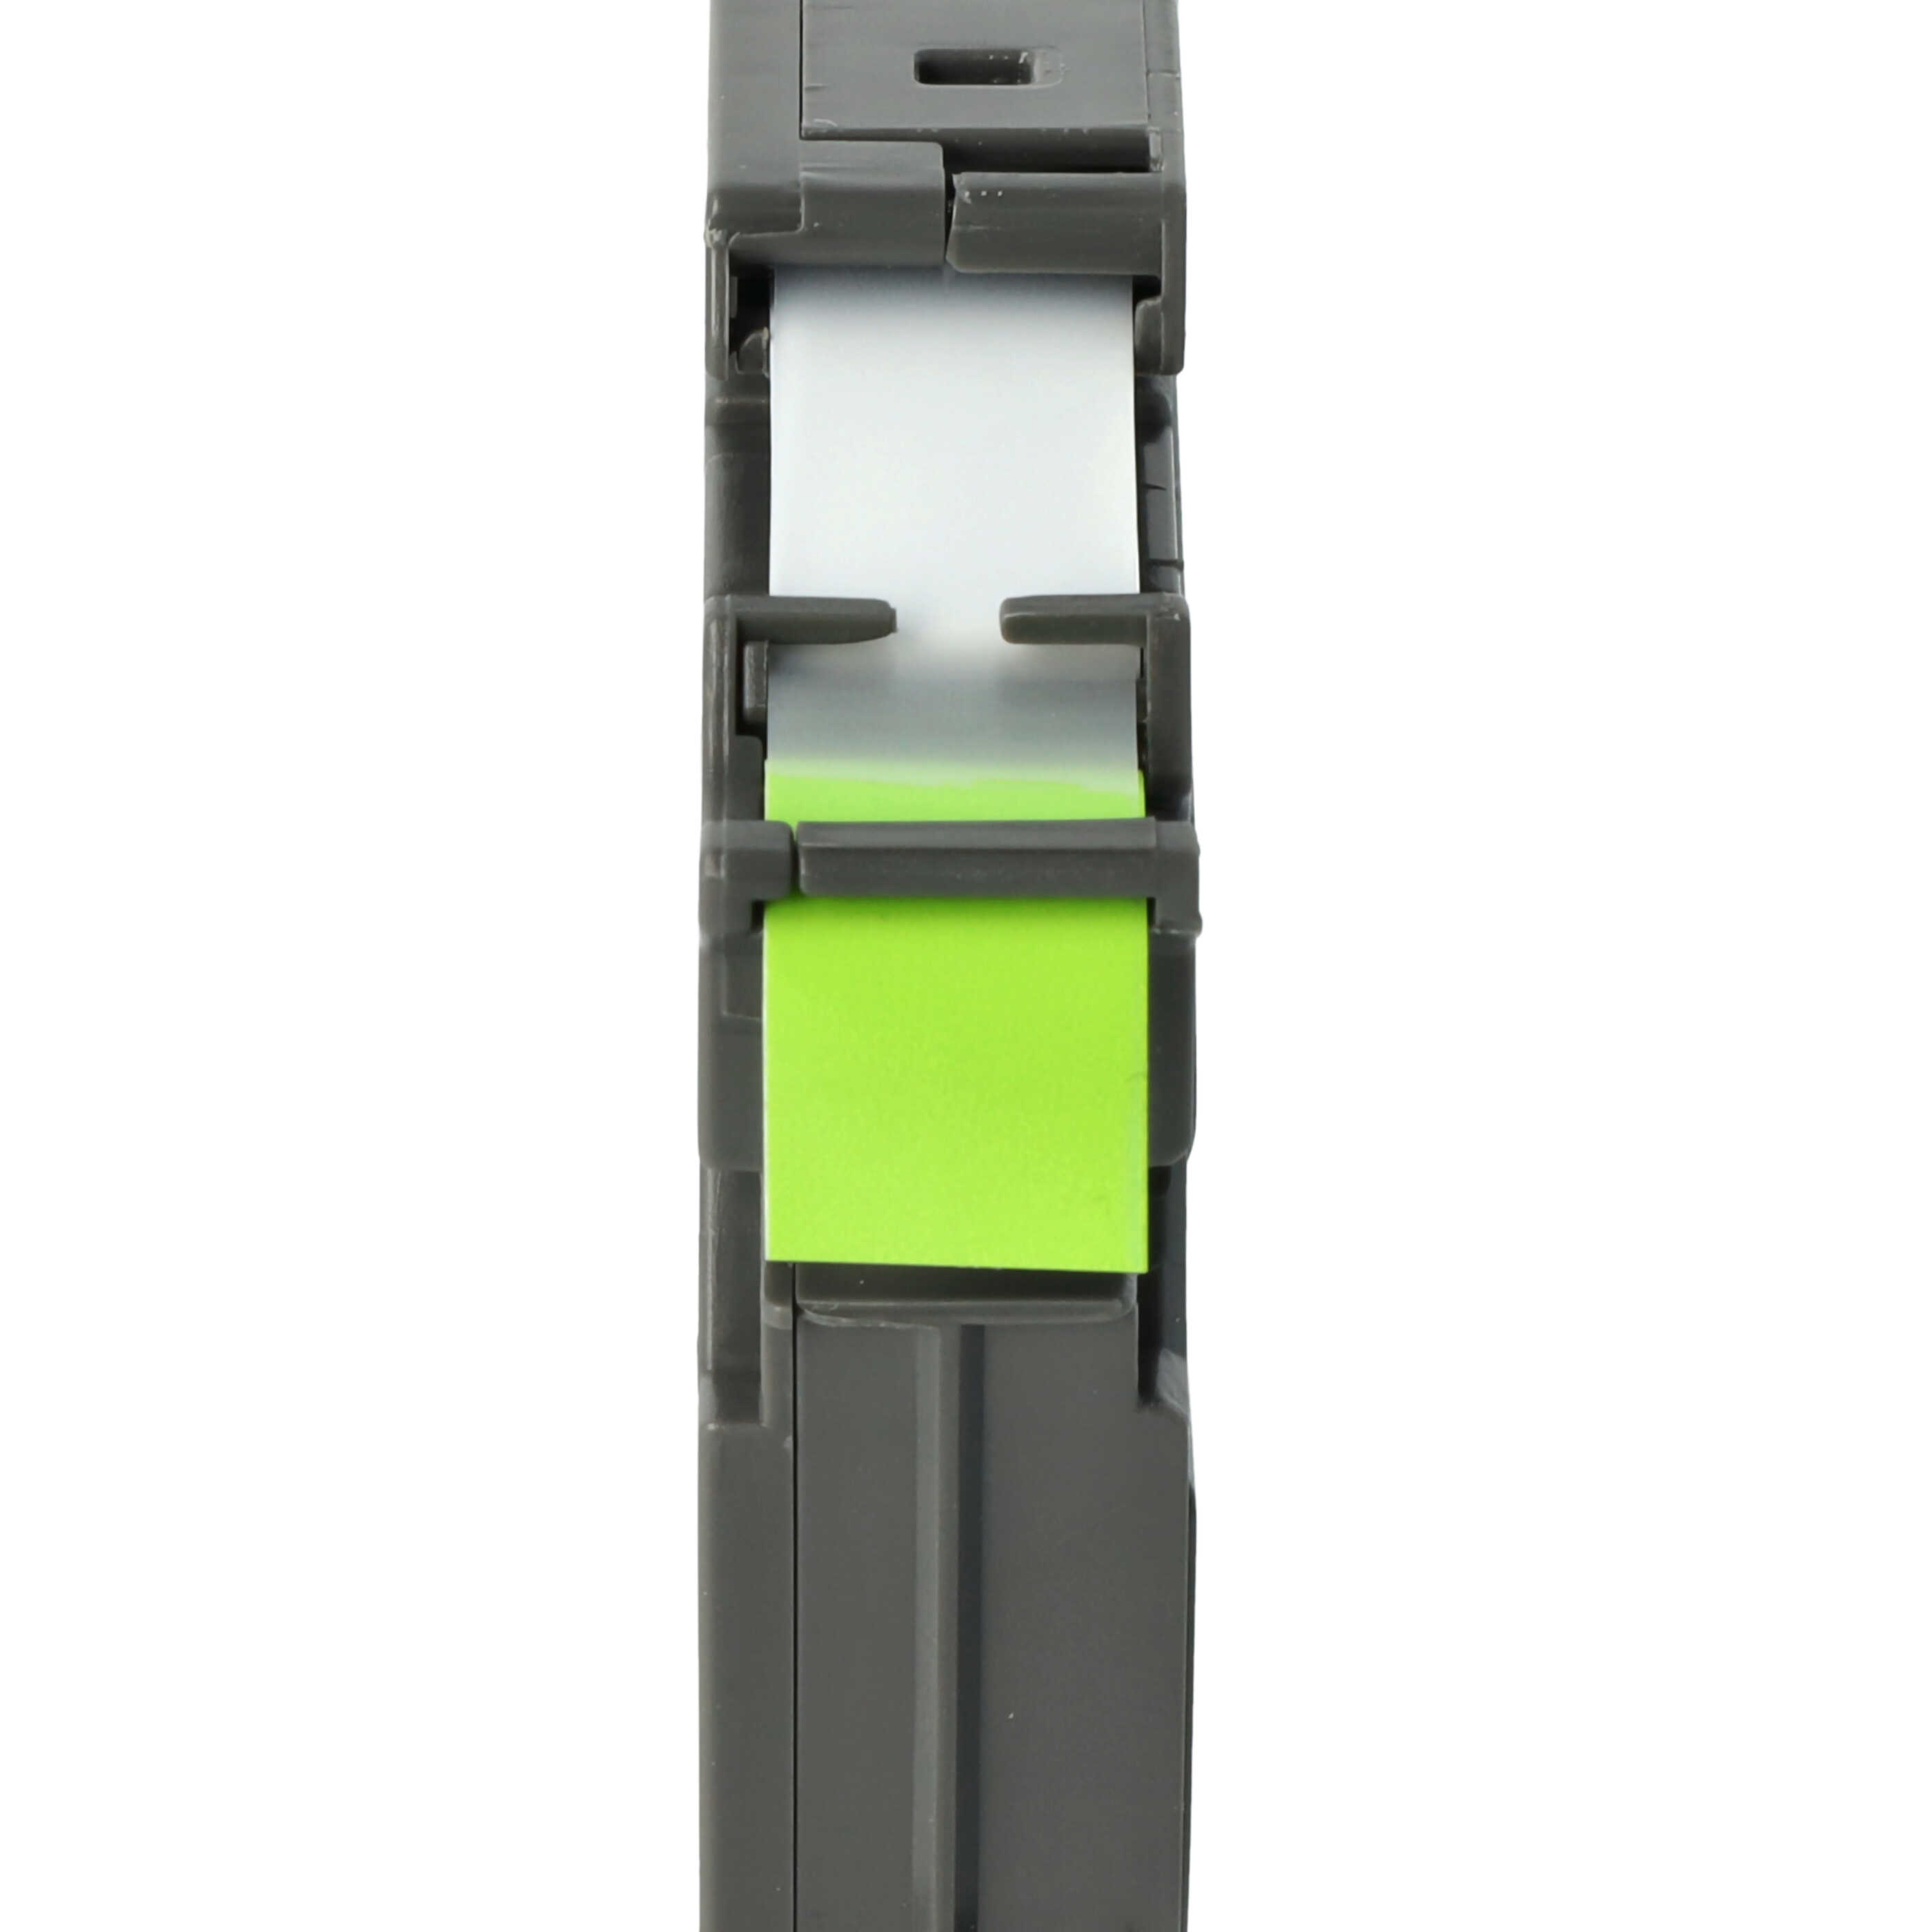 Casete cinta escritura reemplaza Brother TZ-MQG35, TZE-MQG35 Blanco su Verde claro